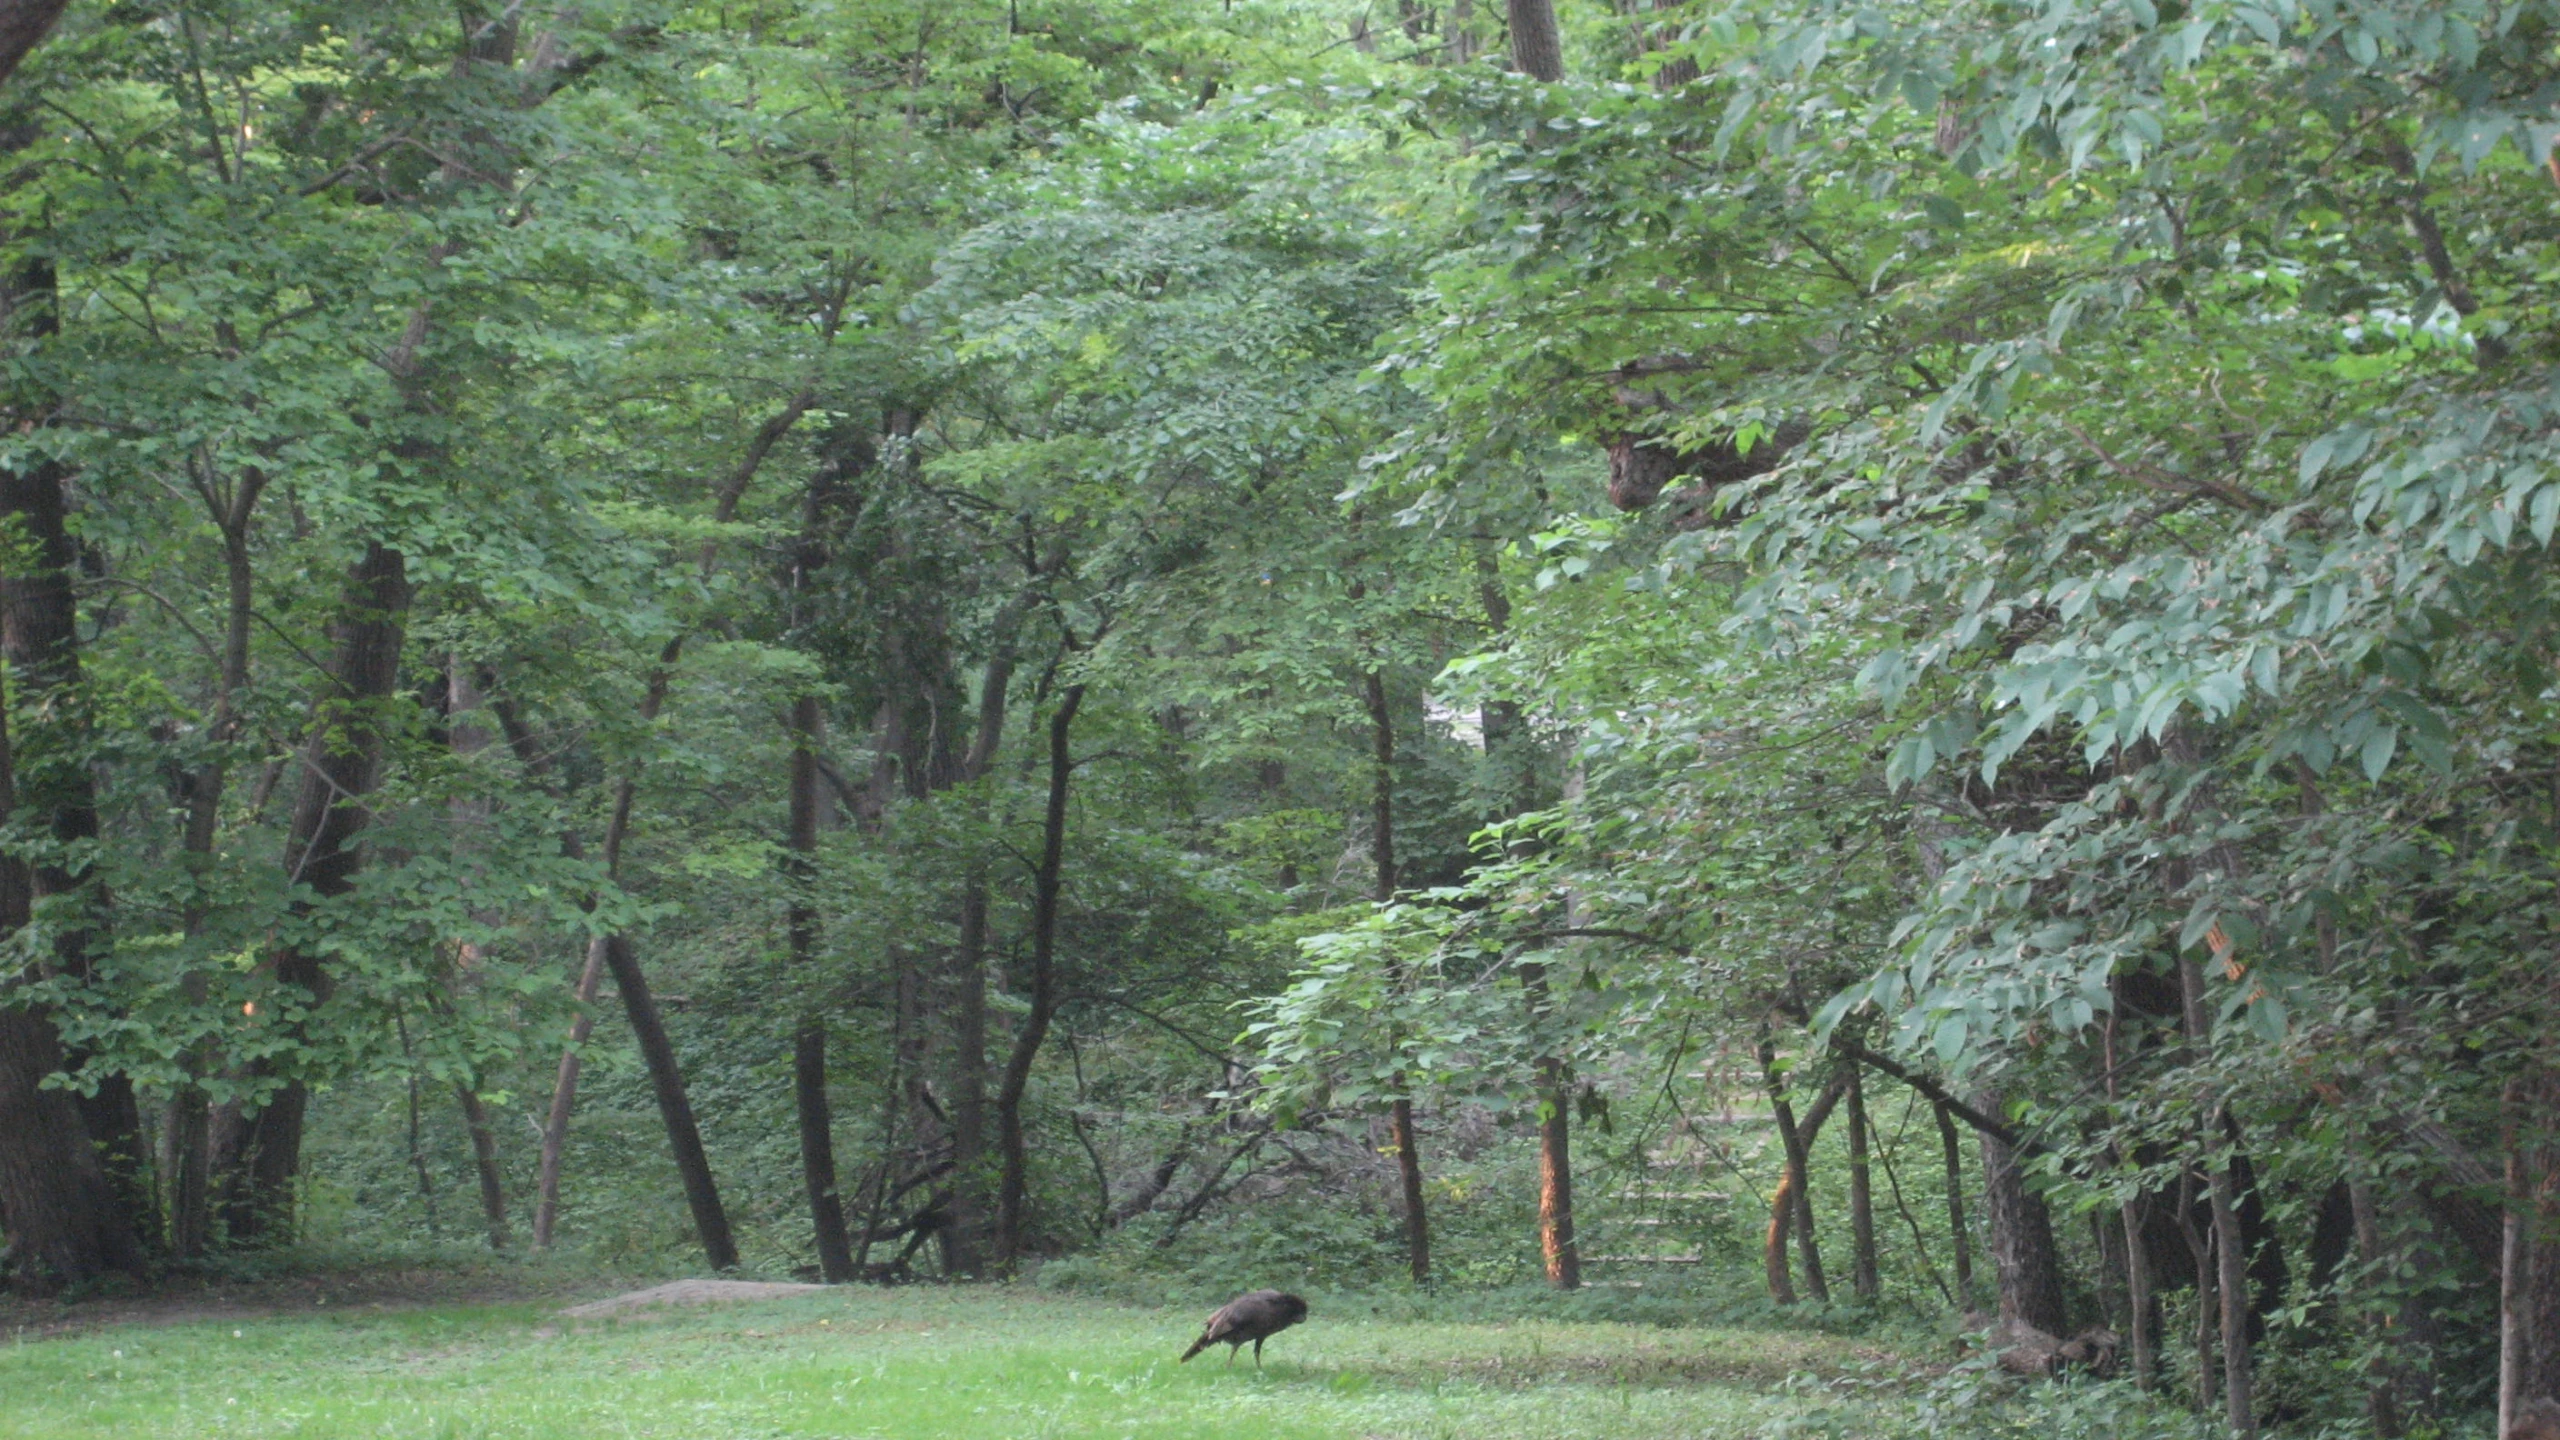 black bird standing on grassy area next to trees